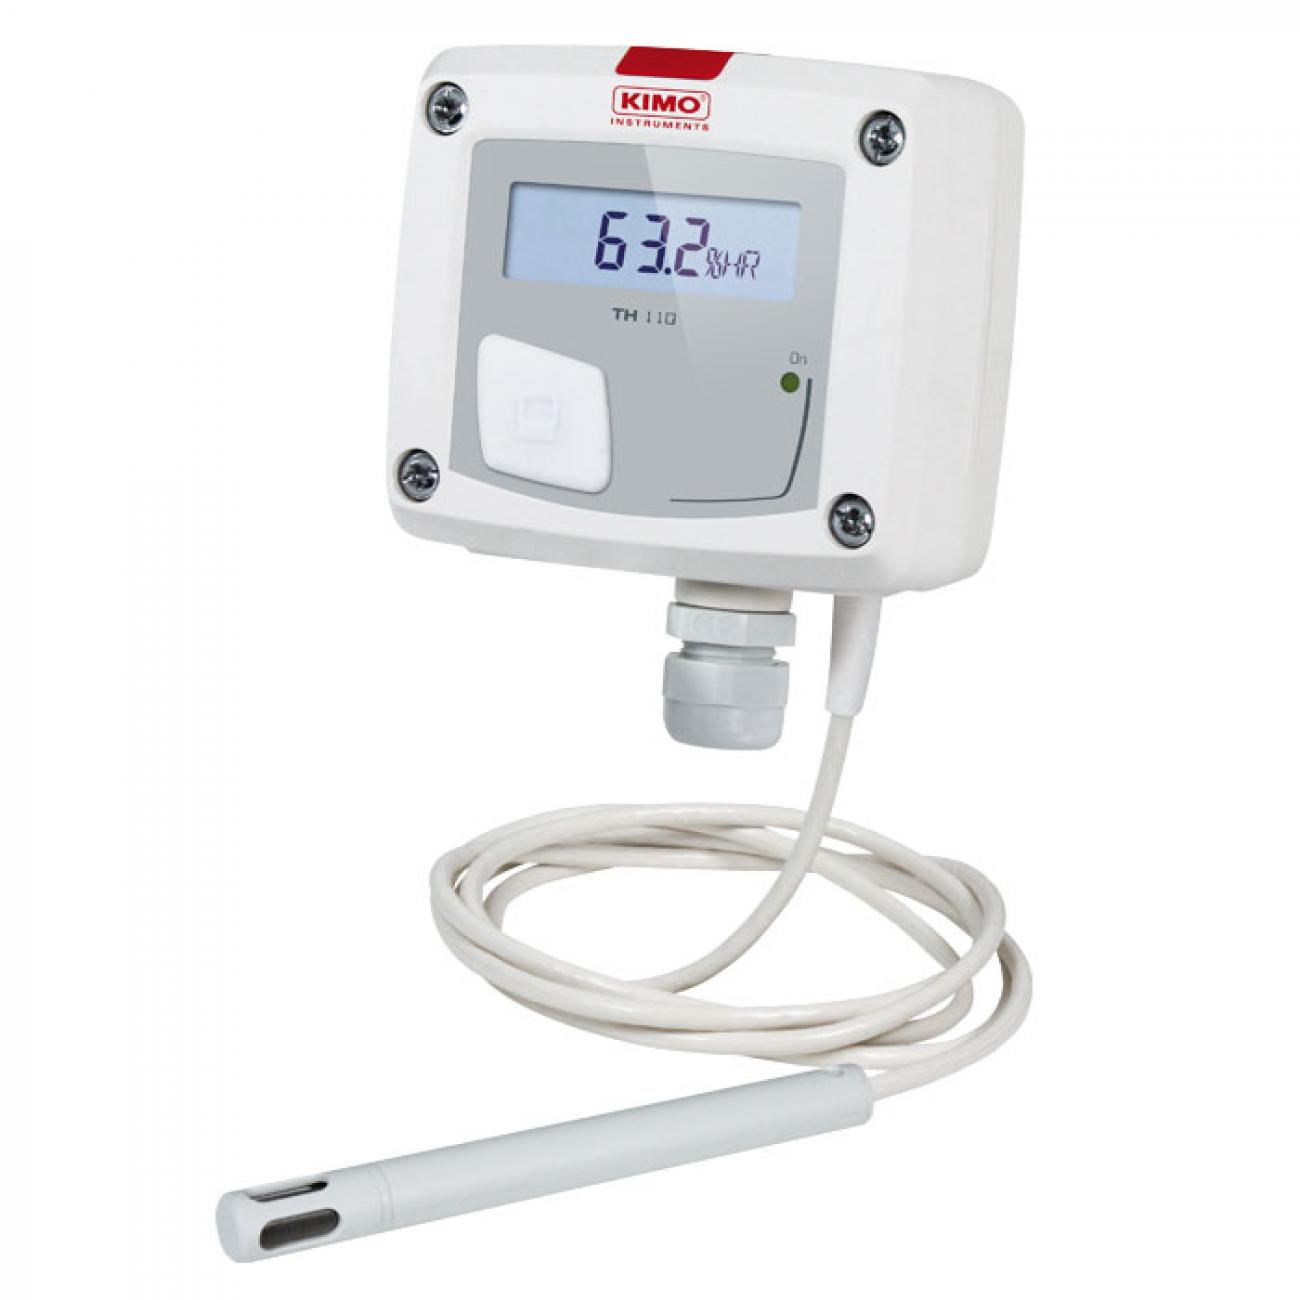 Humidity and temperature sensor